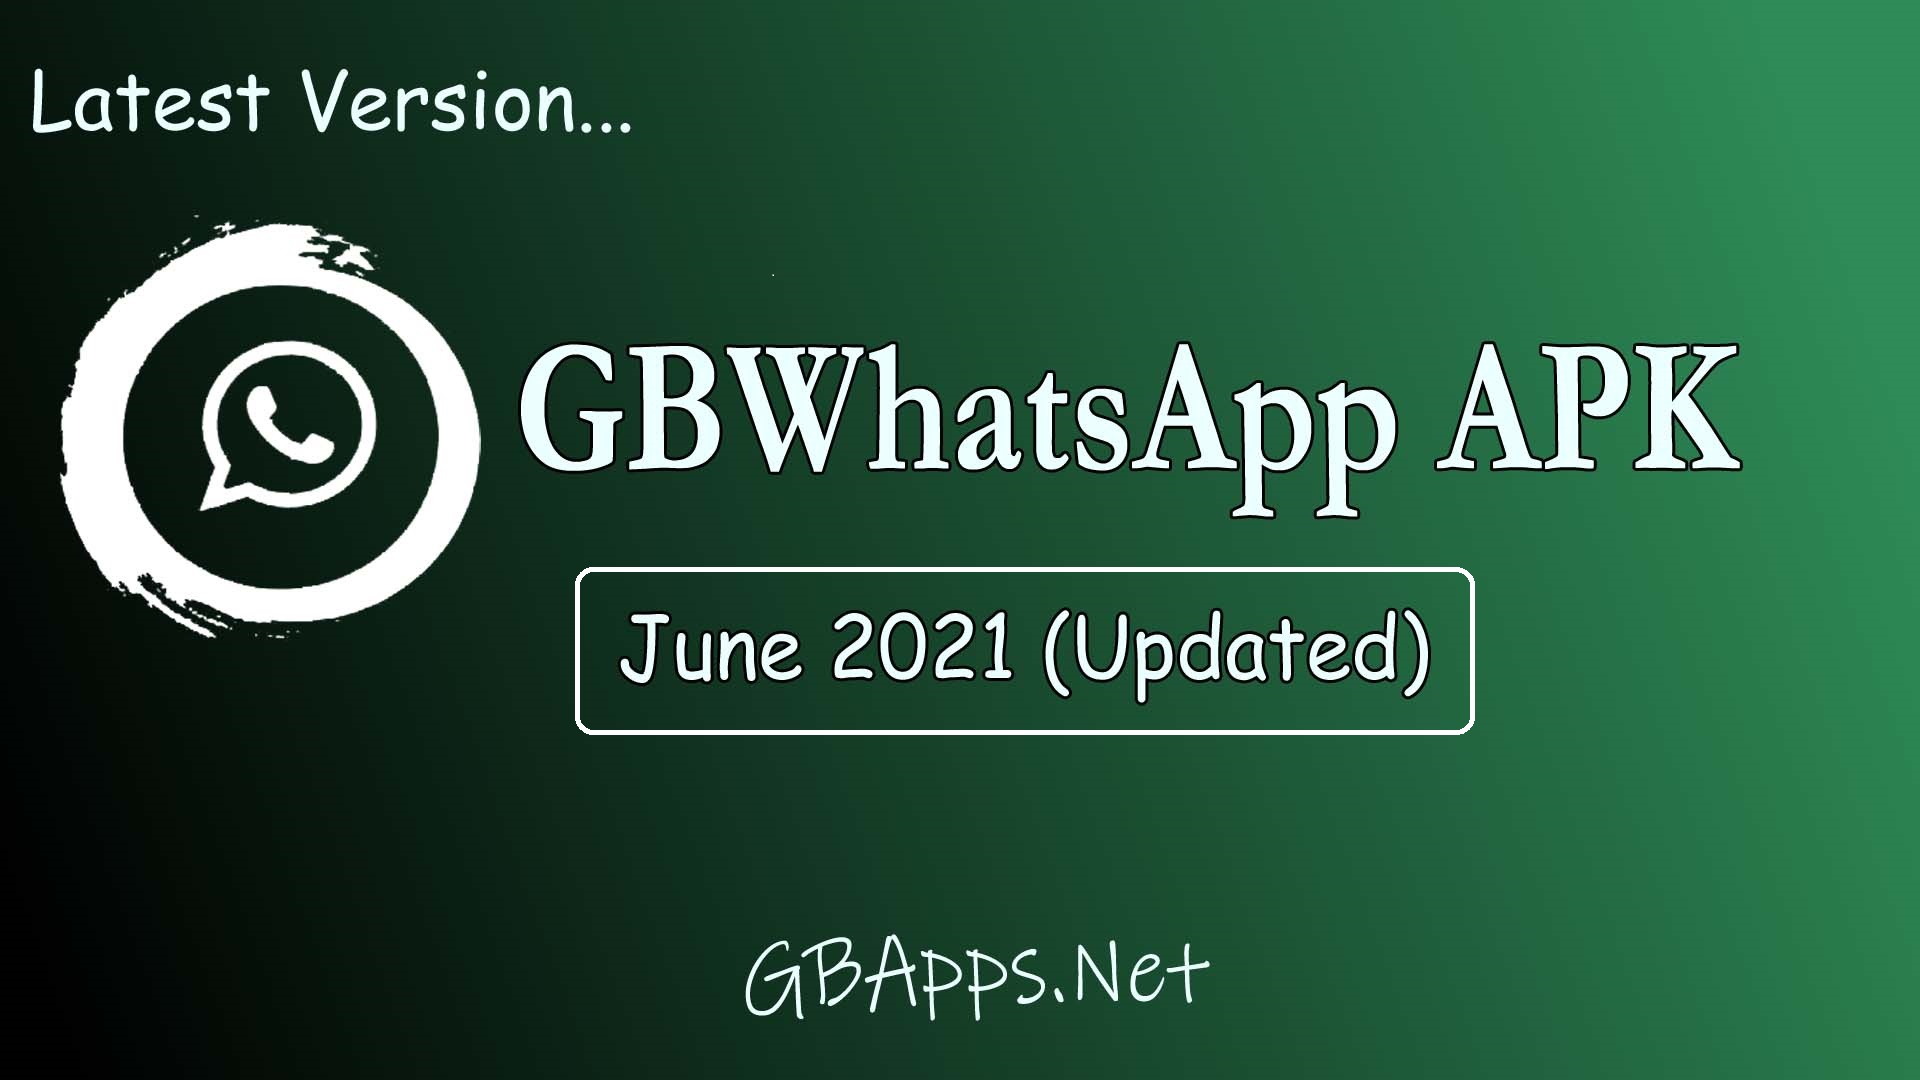 gb whatsapp latest version 2021 download